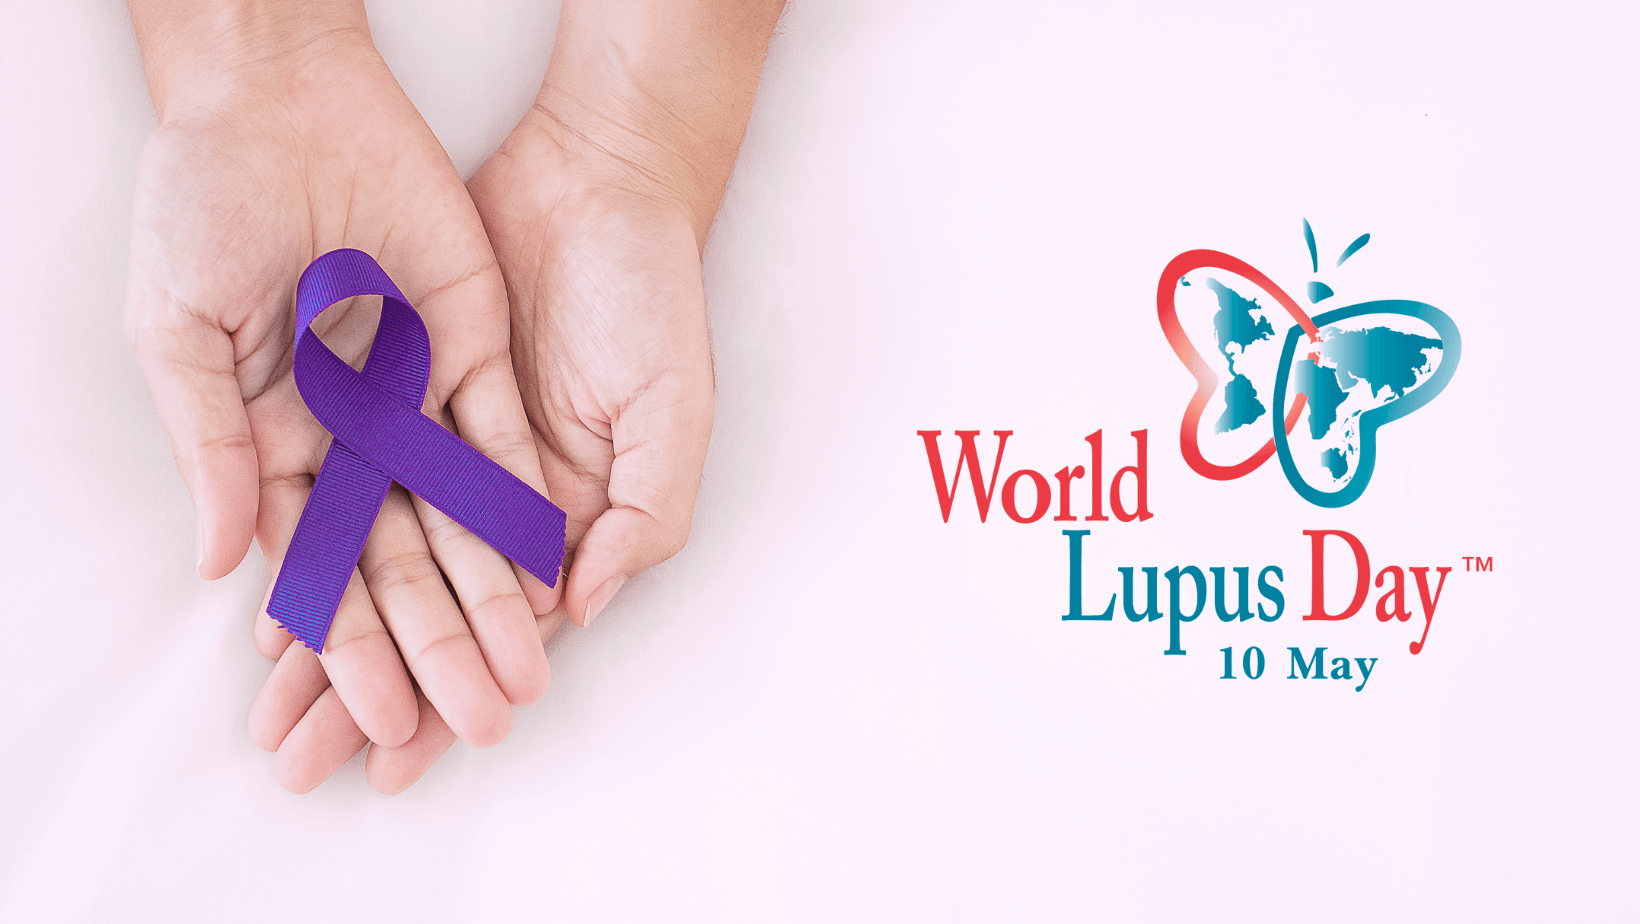 World lupus day